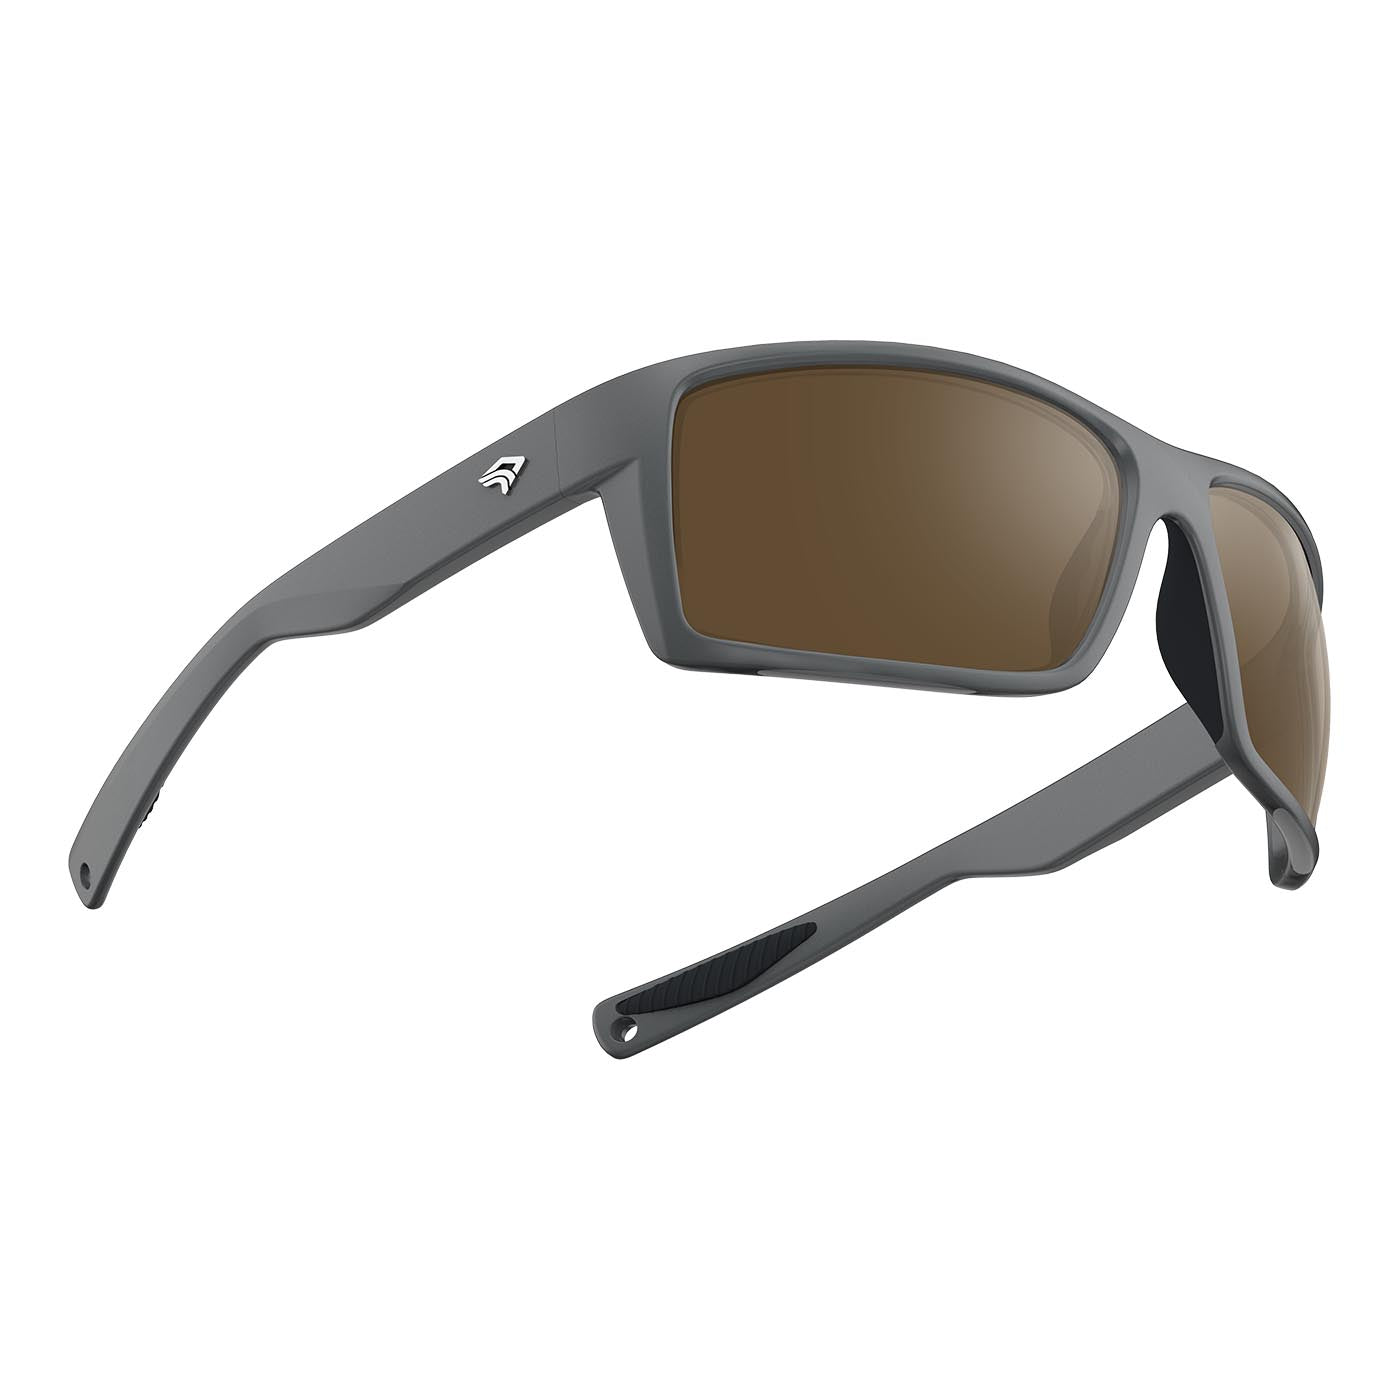 TOREGE Sports Polarized Sunglasses for Men Women Flexible Frame Cycling Running Driving Fishing Mountaineering Trekking Glasses TR24 (Matte Dark Blue